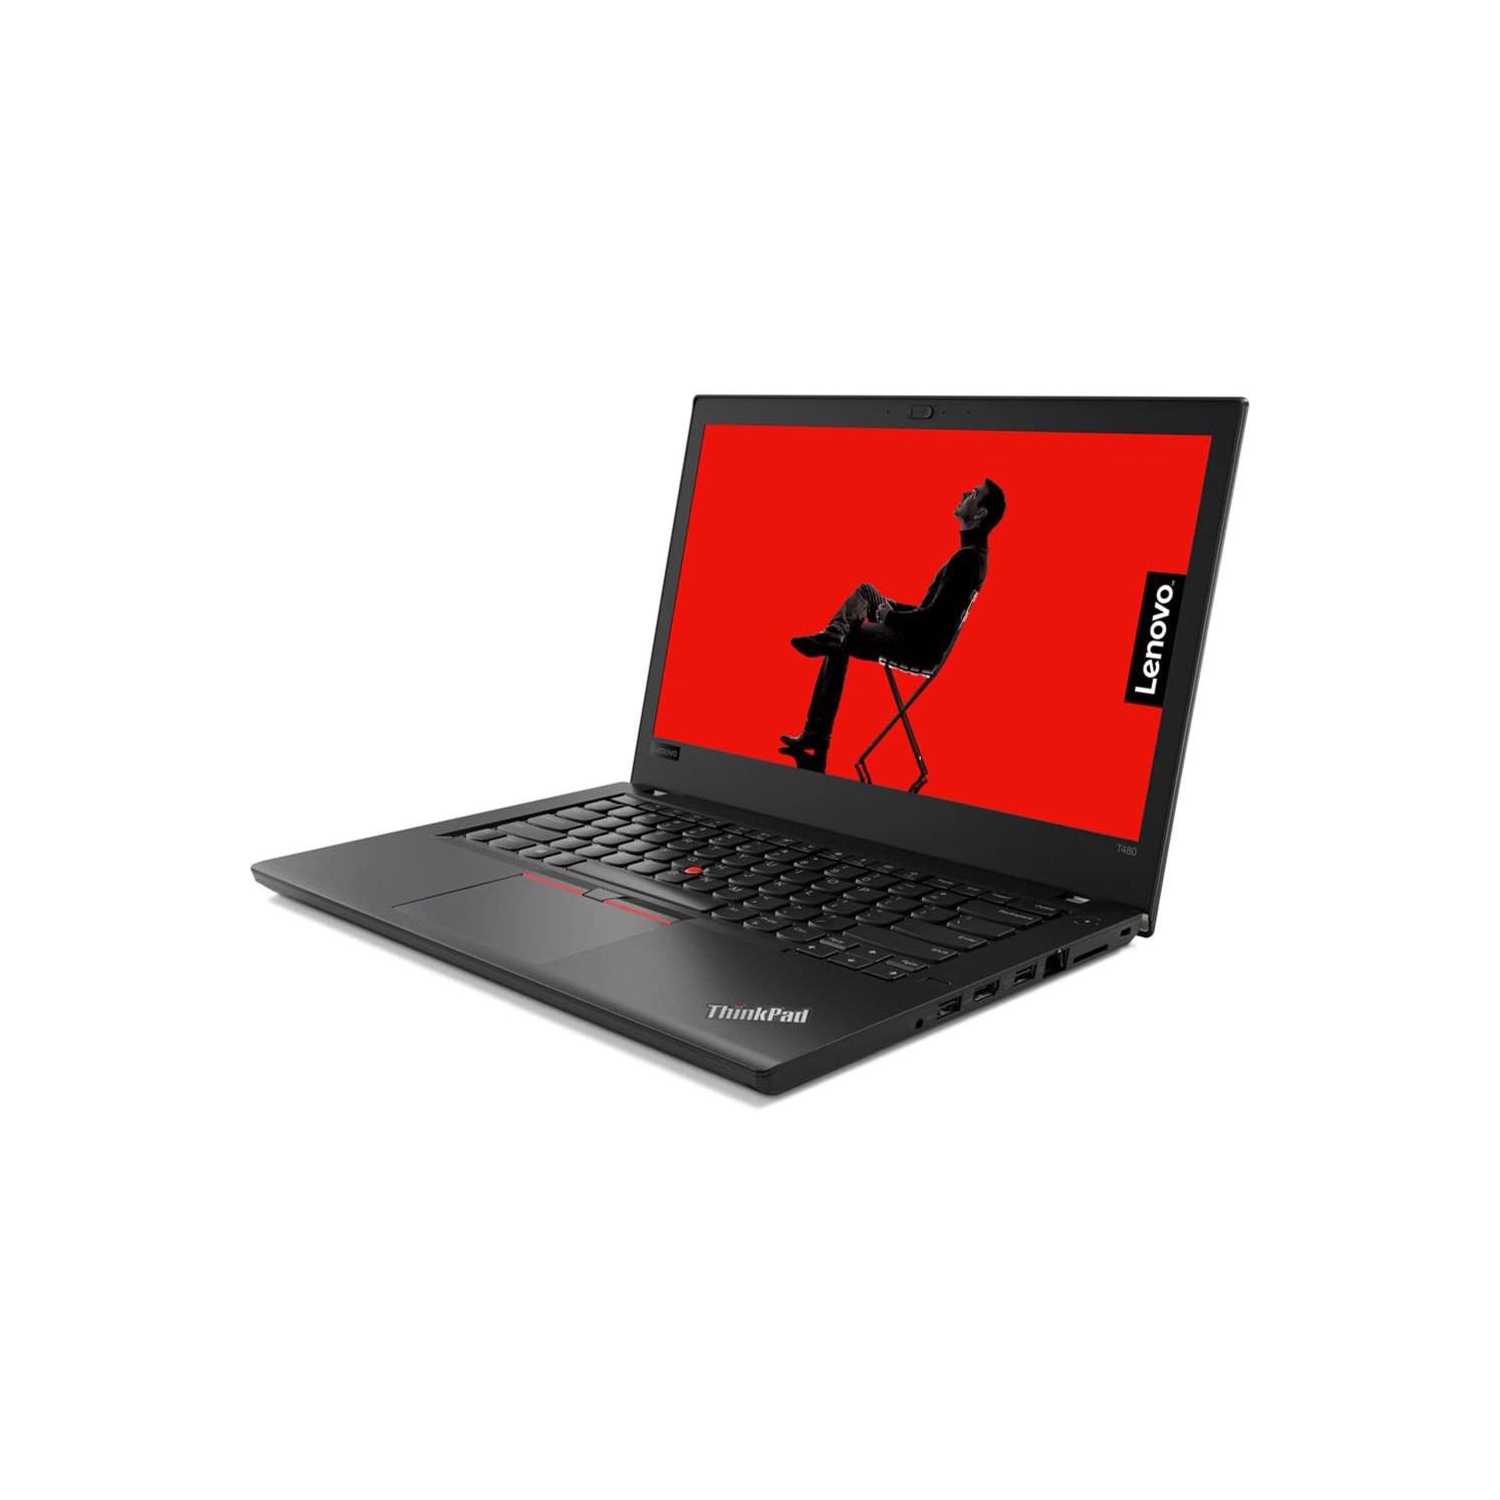 Refurbished (Good) - Lenovo ThinkPad T490 Business Laptop - Intel Core i7-8665U, 16GB, 512GB SSD, Bluetooth, 14" TFT, Windows 10 PRO - 1 Year Warranty